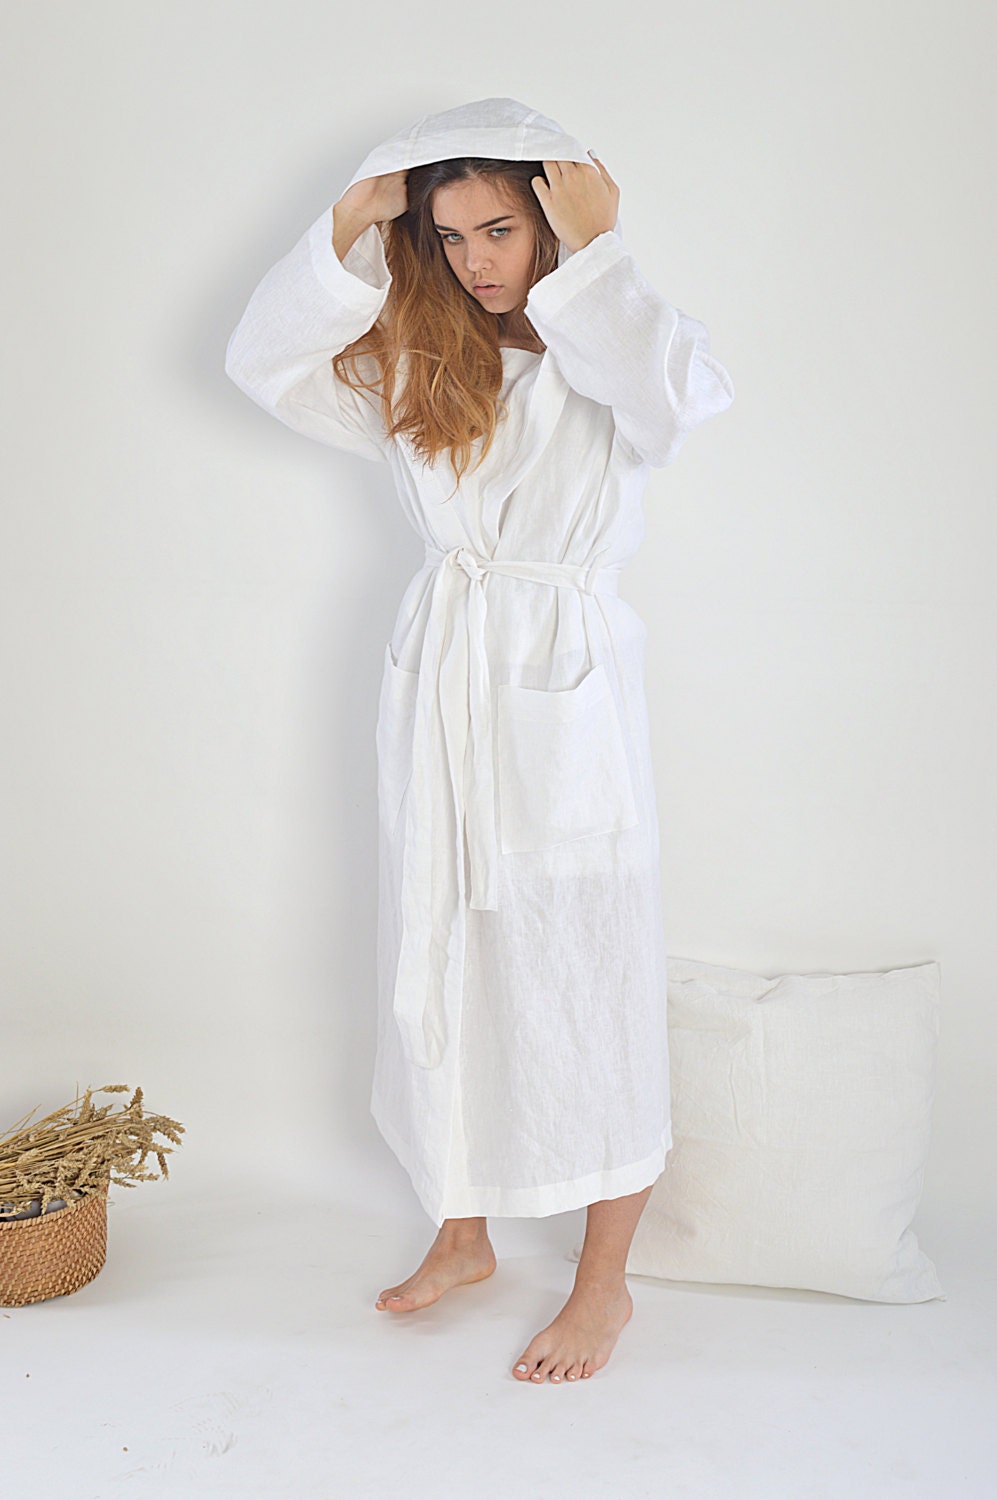 marupeLINENhouse Linen Morning Robe, Woman's Linen Bathrobe, Linen Loungewear, Linen Short Robe